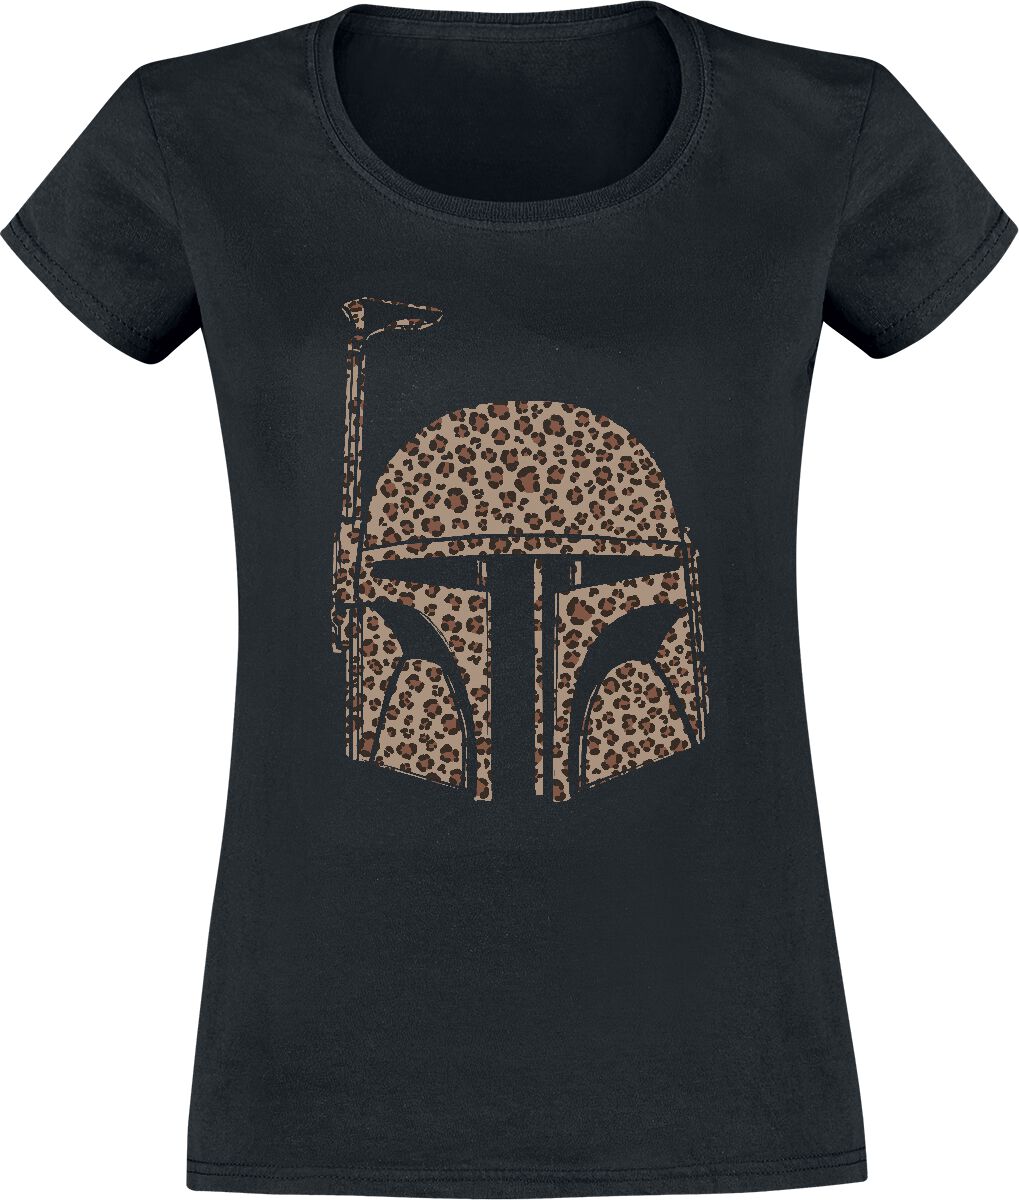 Star Wars Cheetah Boba T-Shirt black